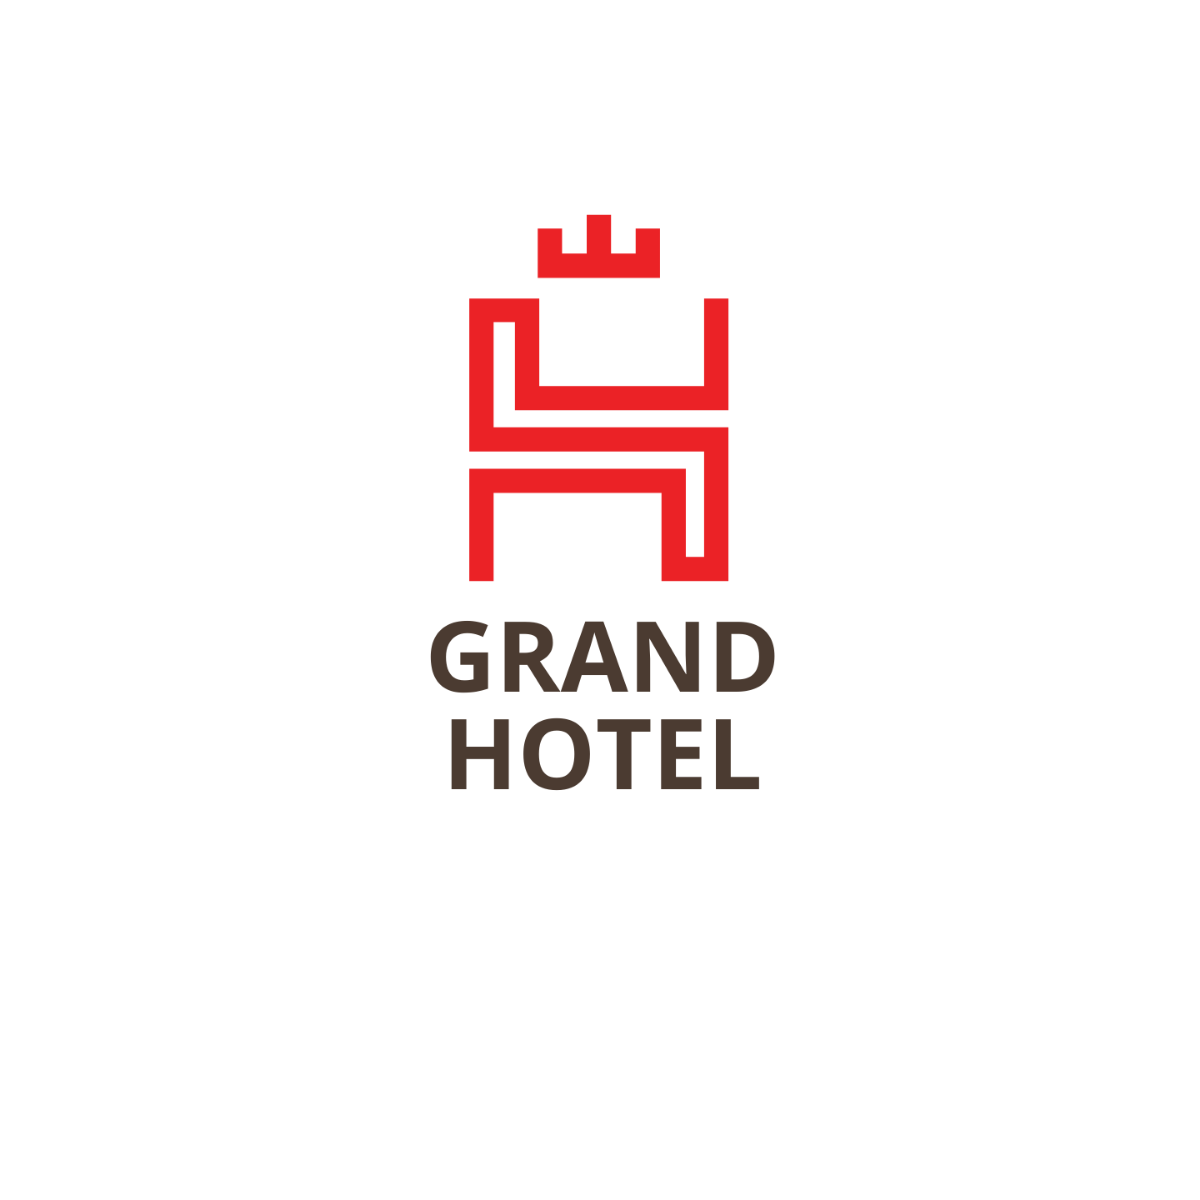 Grand Hotel Logo Template